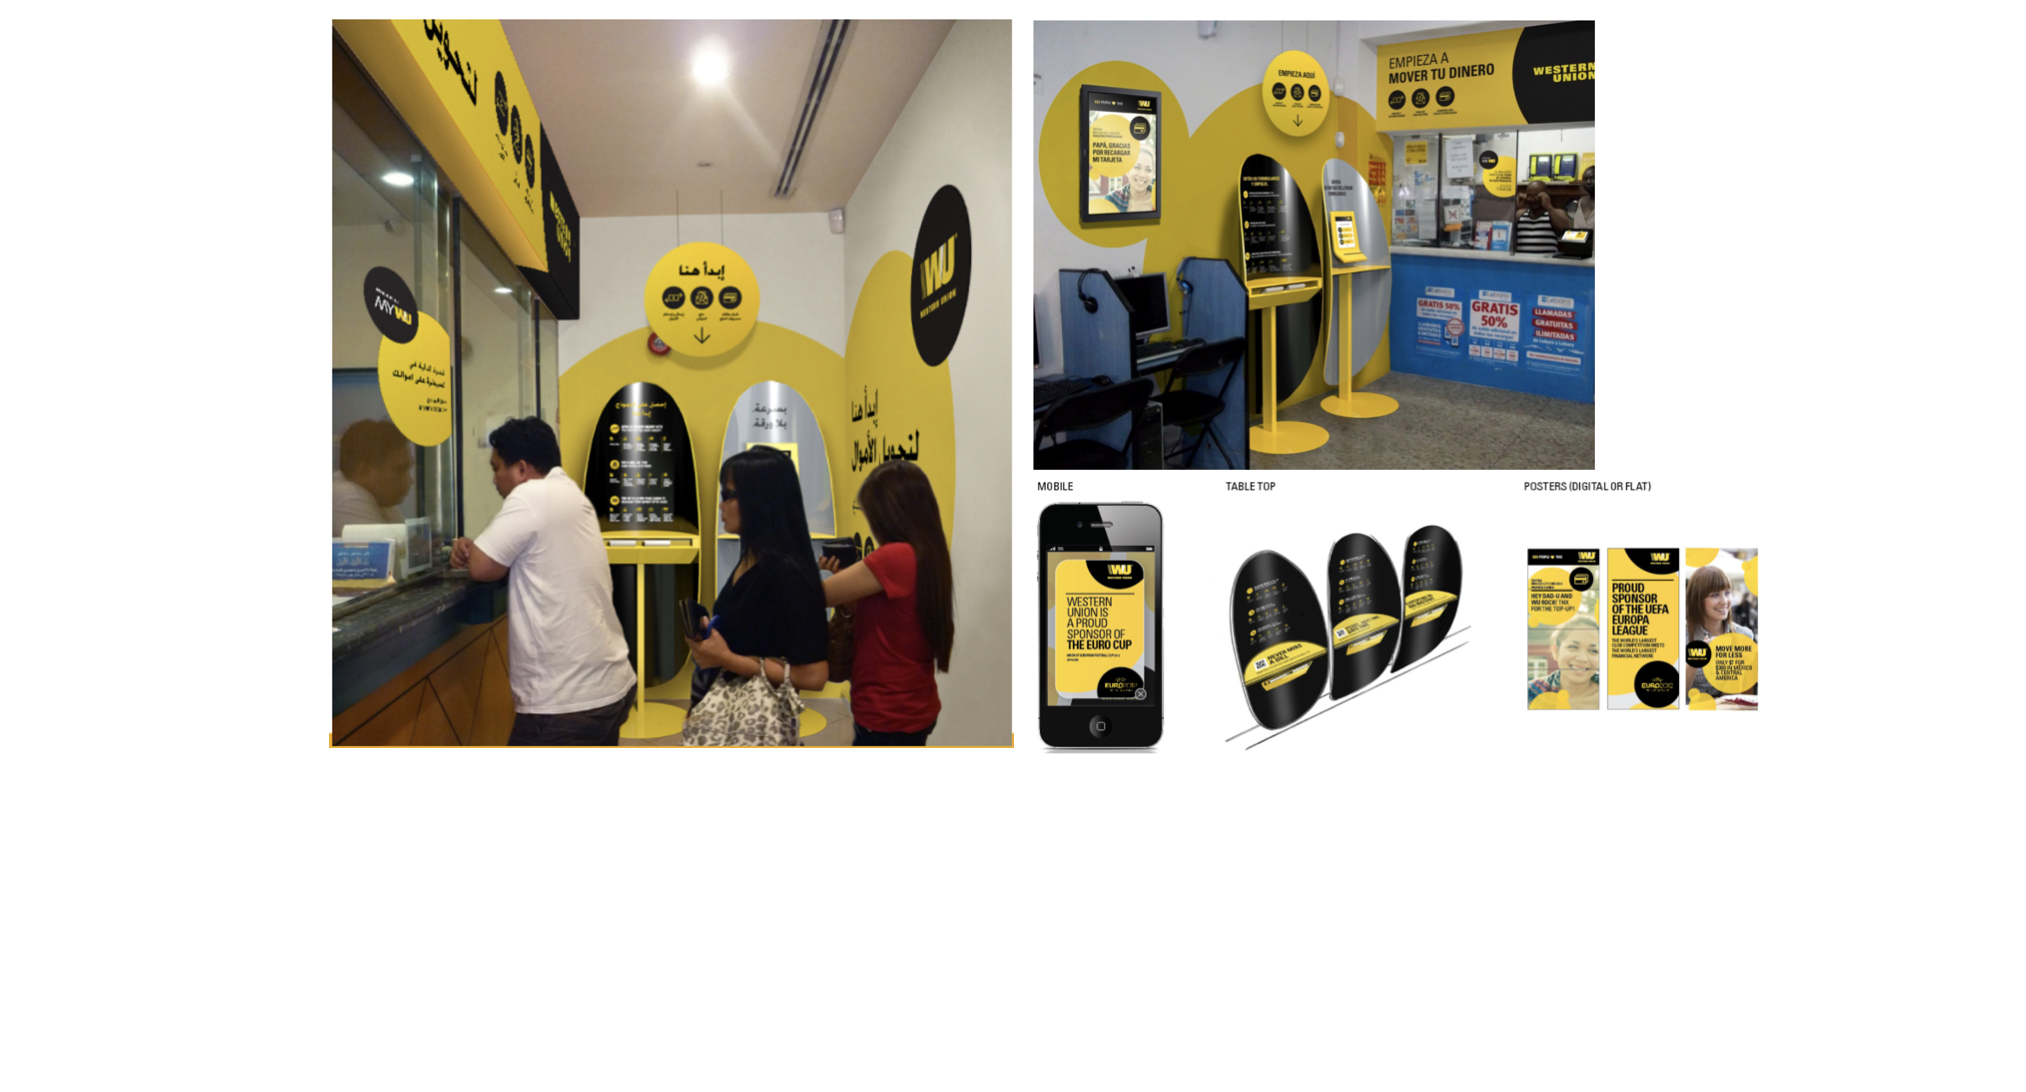 Western Union Brand Experience